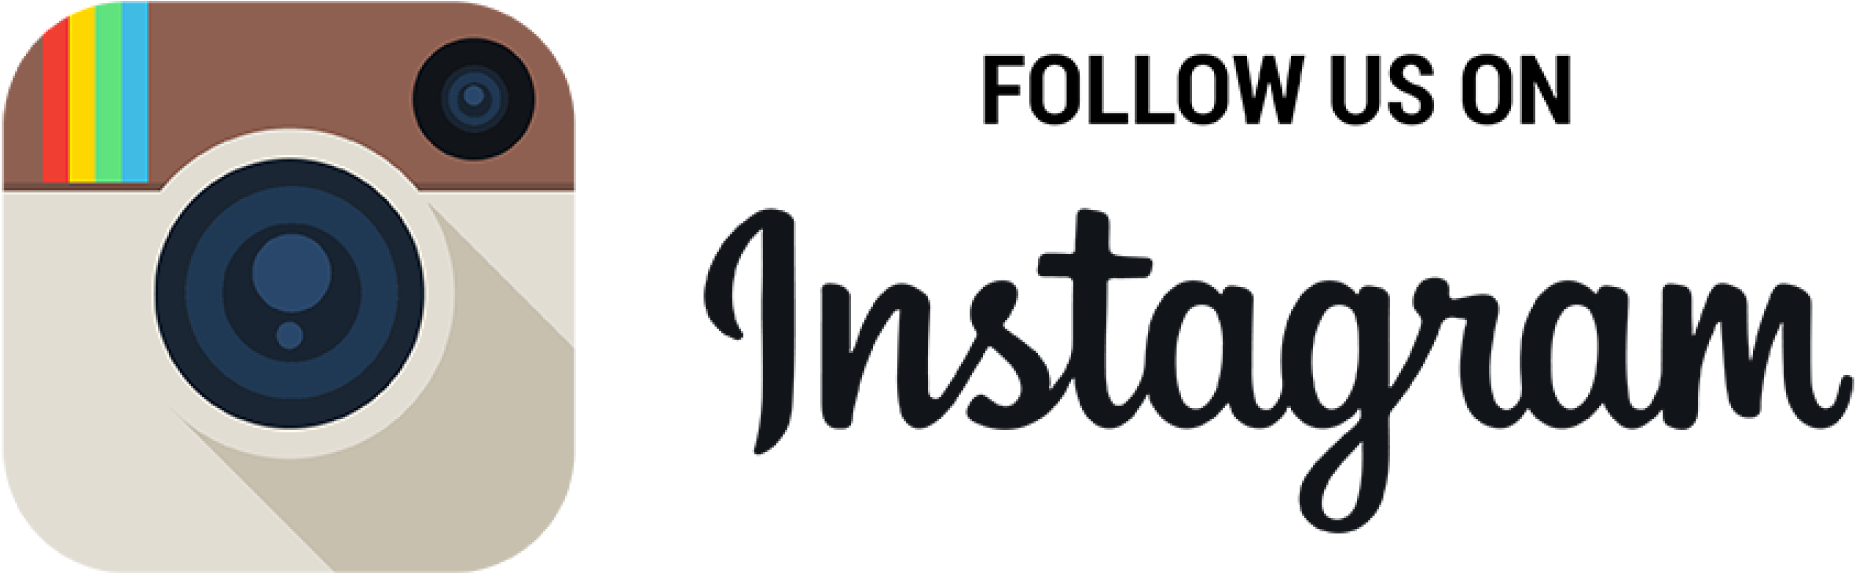 Instagram Follow Us Promotion Banner PNG